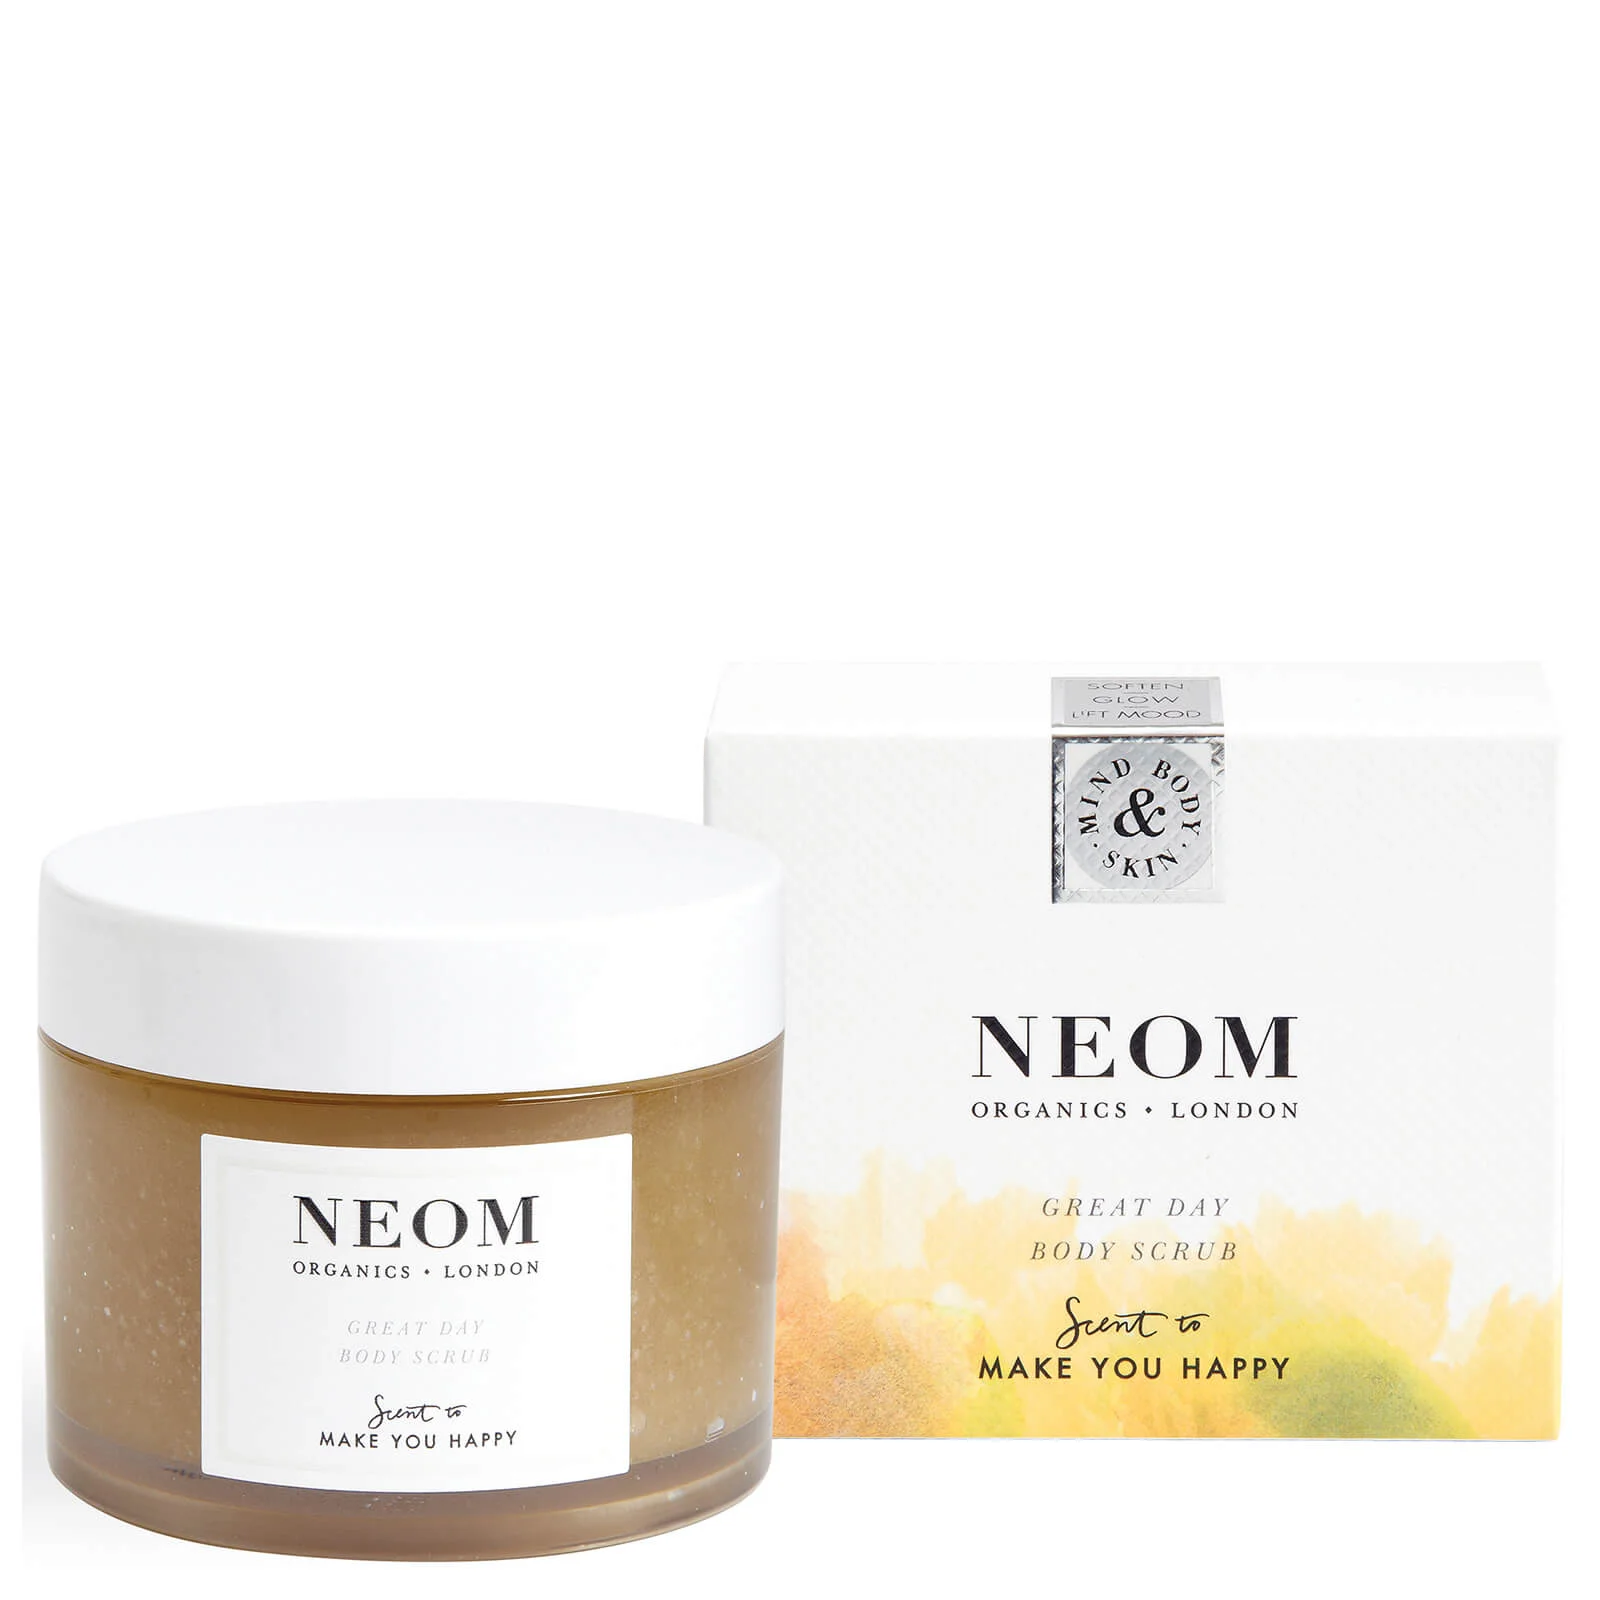 NEOM Organics Great Day Body Scrub (332g) Image 1